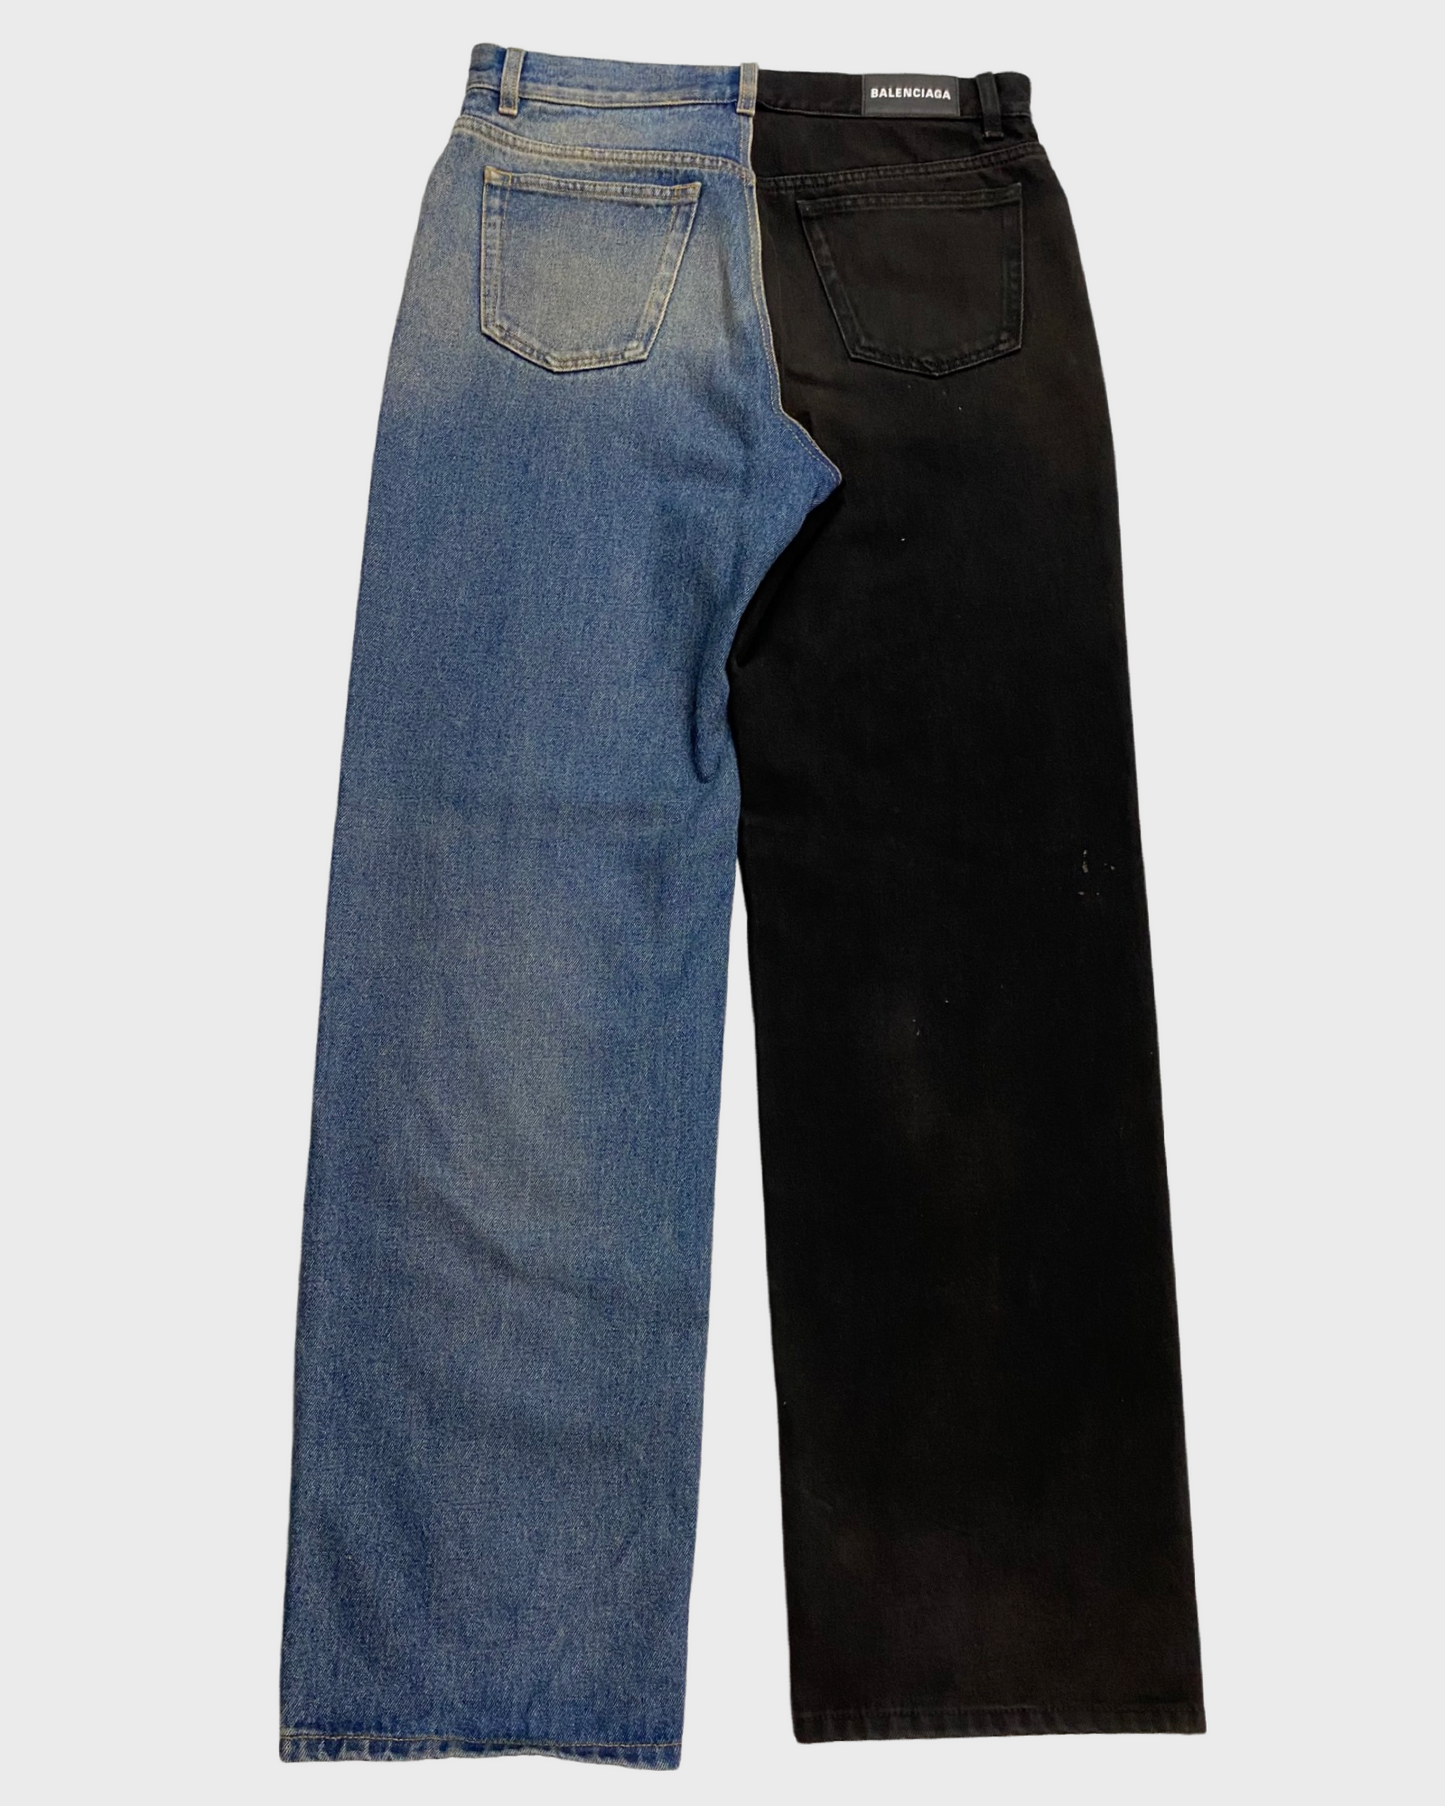 BALENCIAGA 2 tone split split jeans denim blue & black SIZE:W30